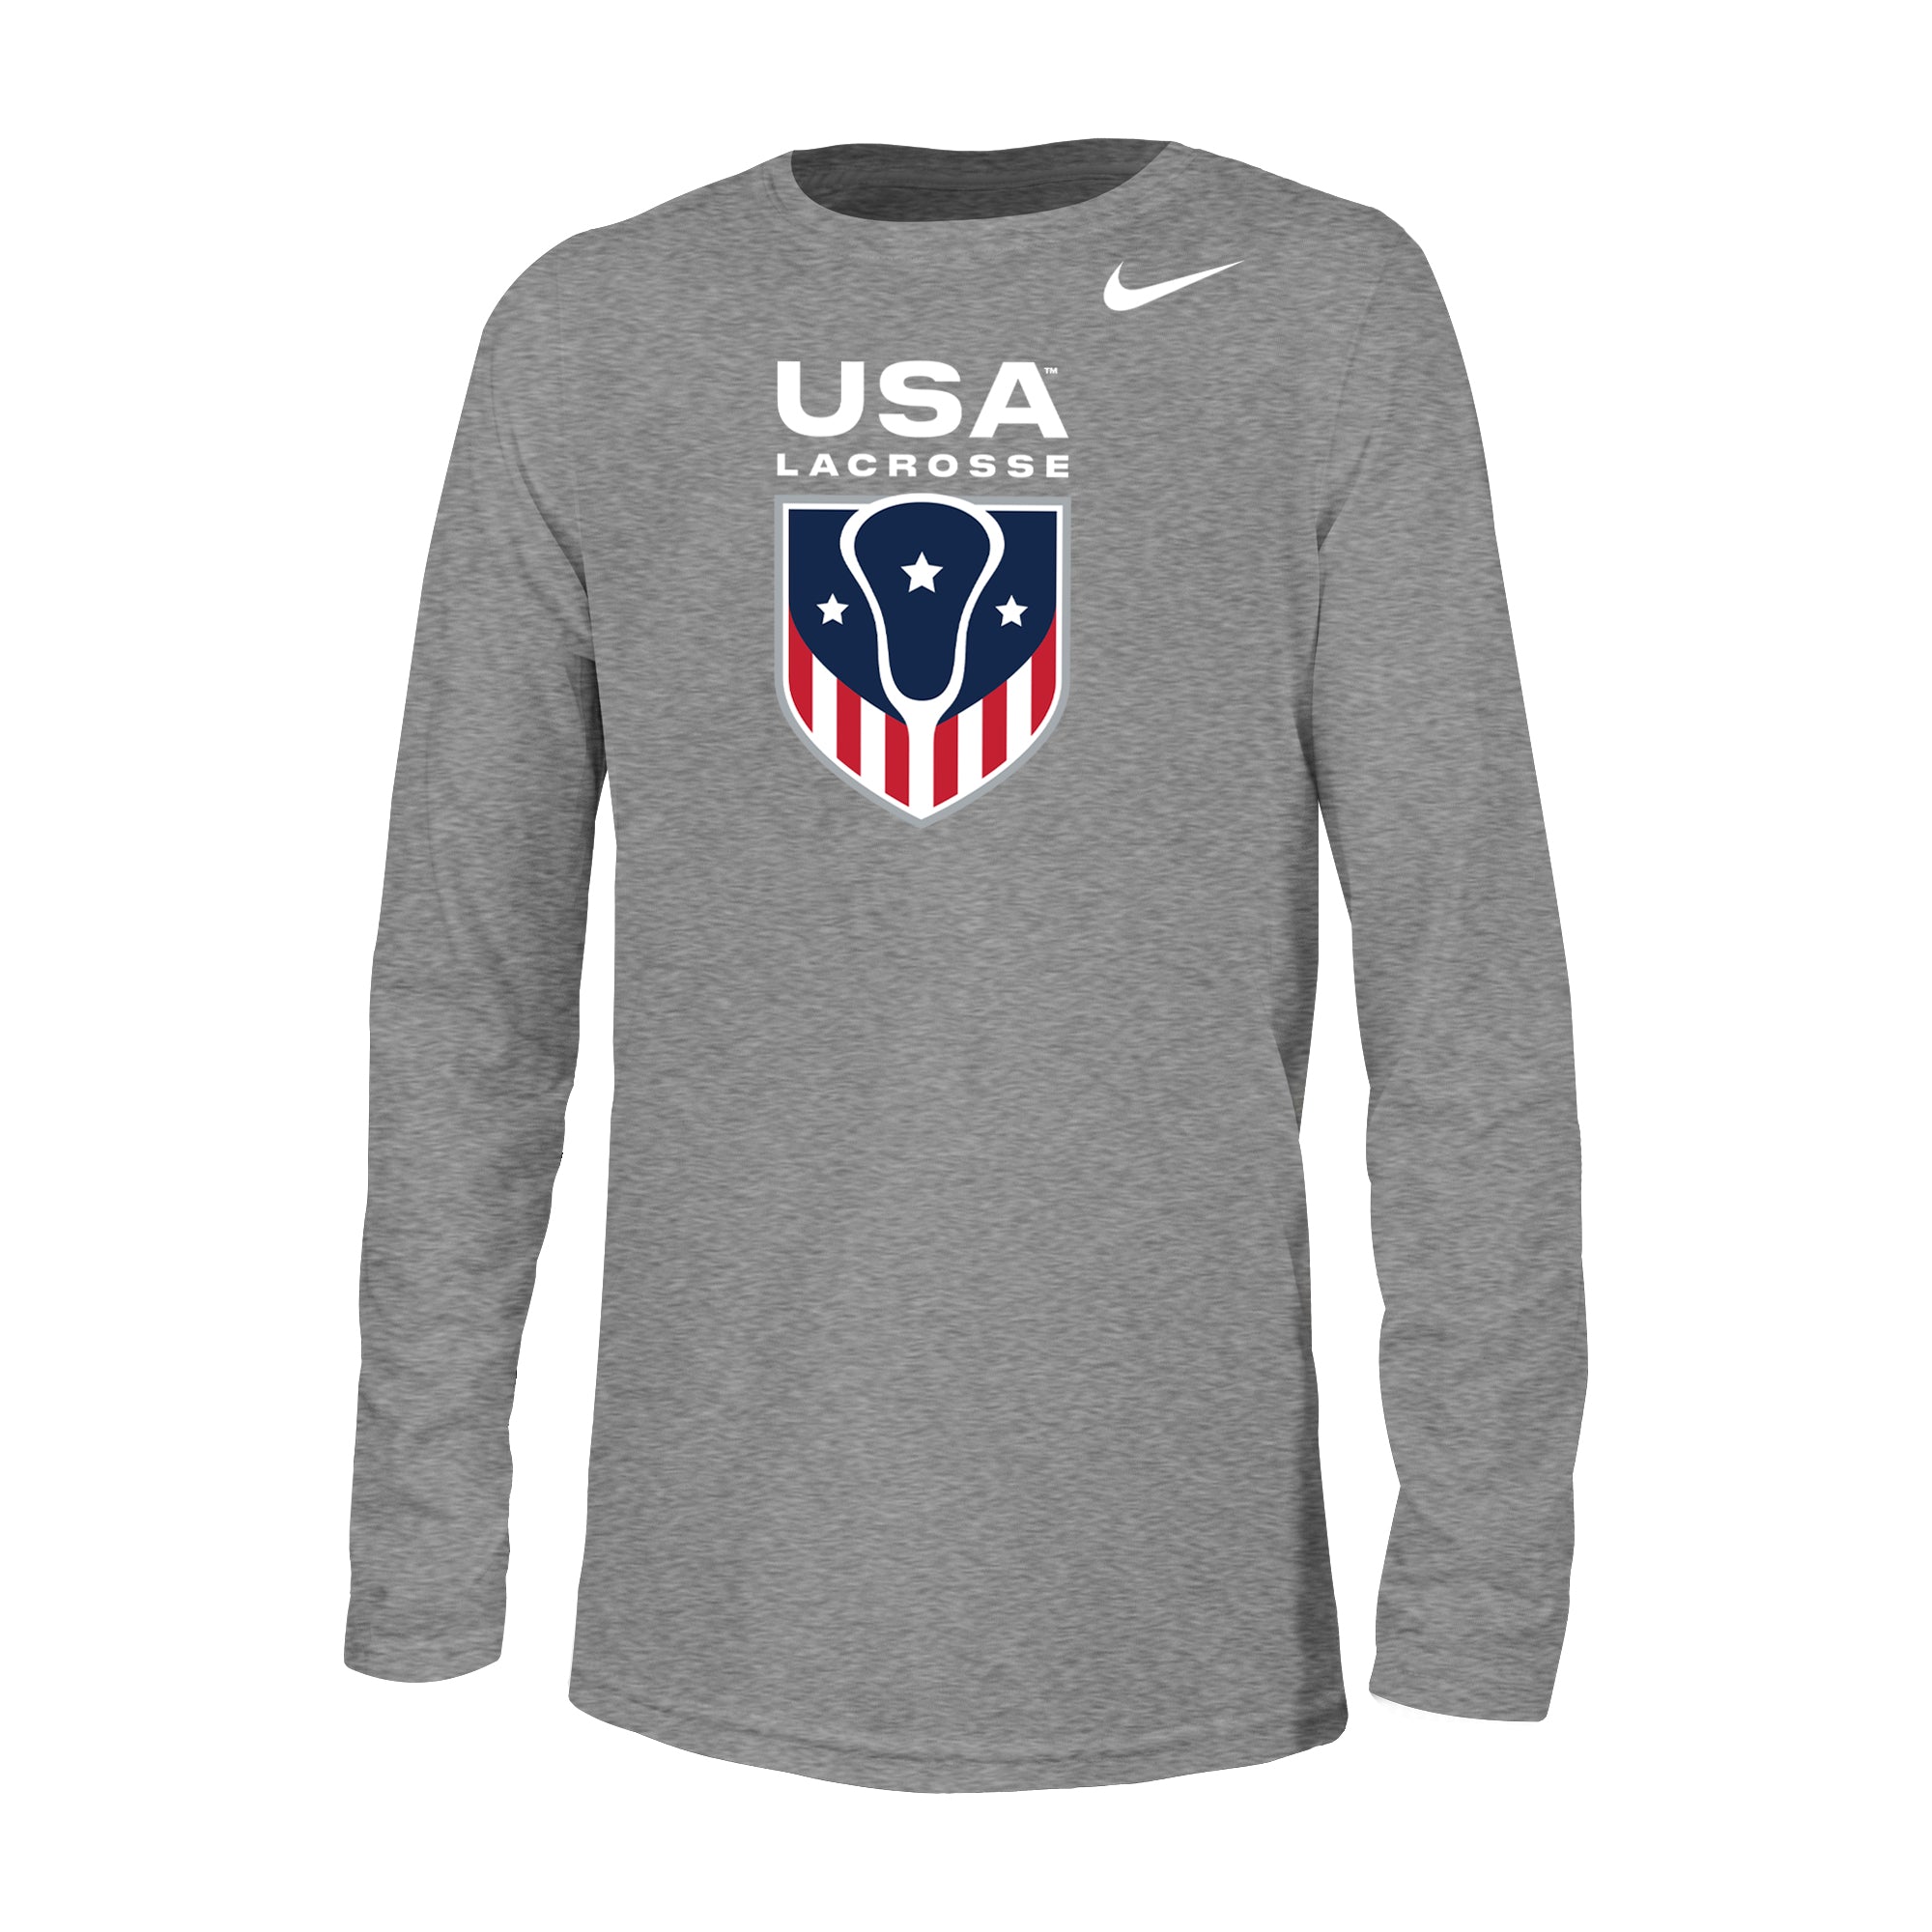 Youth USA Lacrosse Nike Dri-FIT Legend Long Sleeve